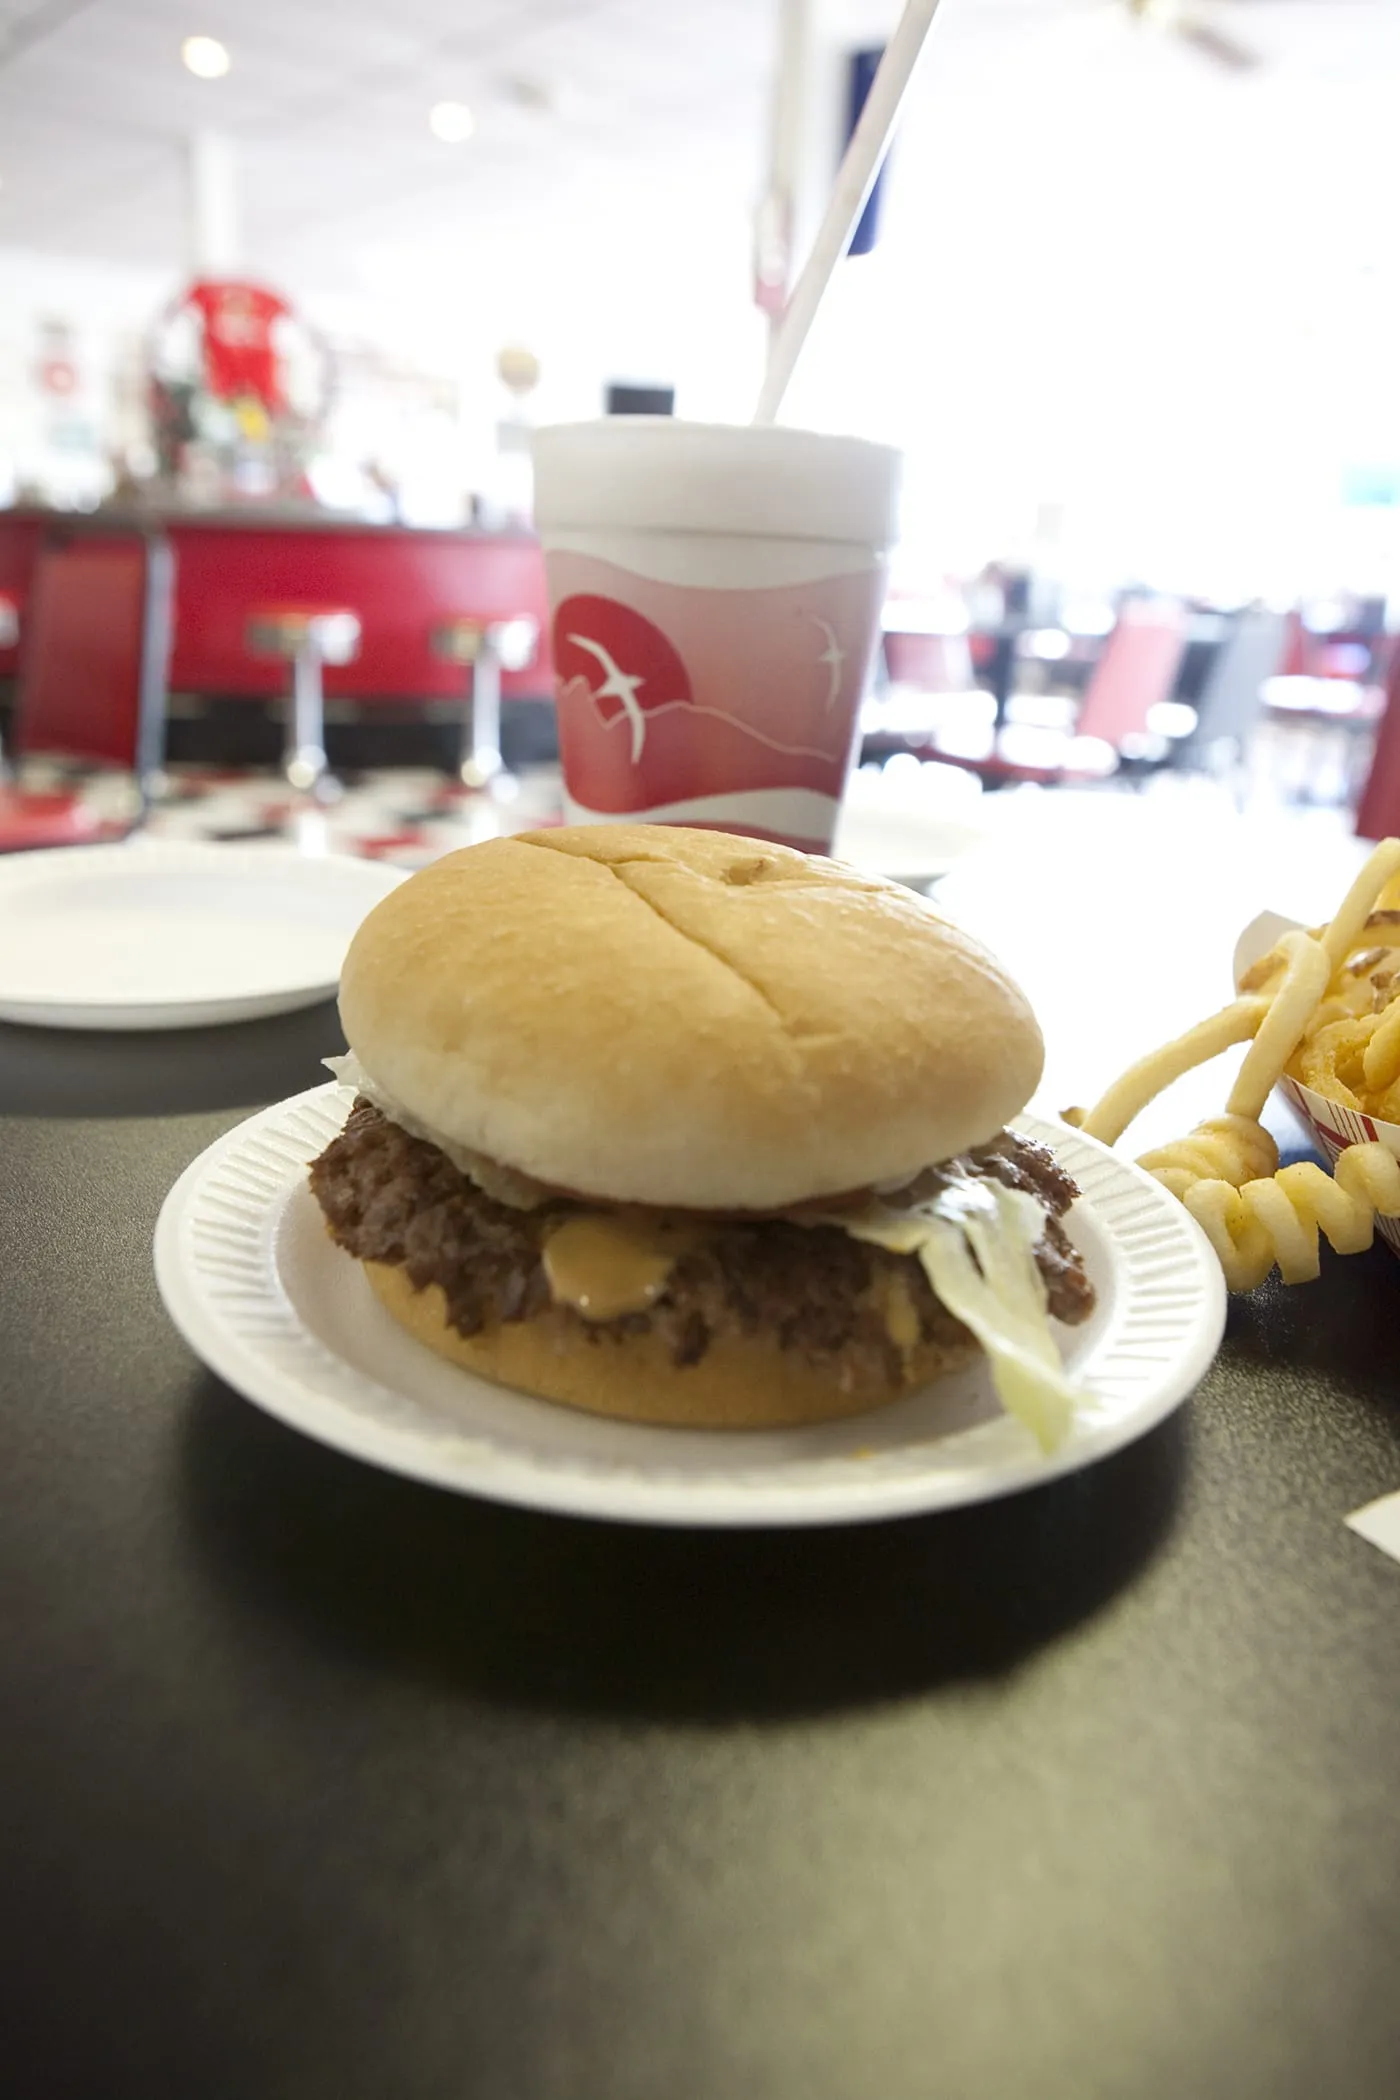 Guberburger at The Wheel Inn in Sedalia, Missouri - A Hamburger topped with Peanut Butter 